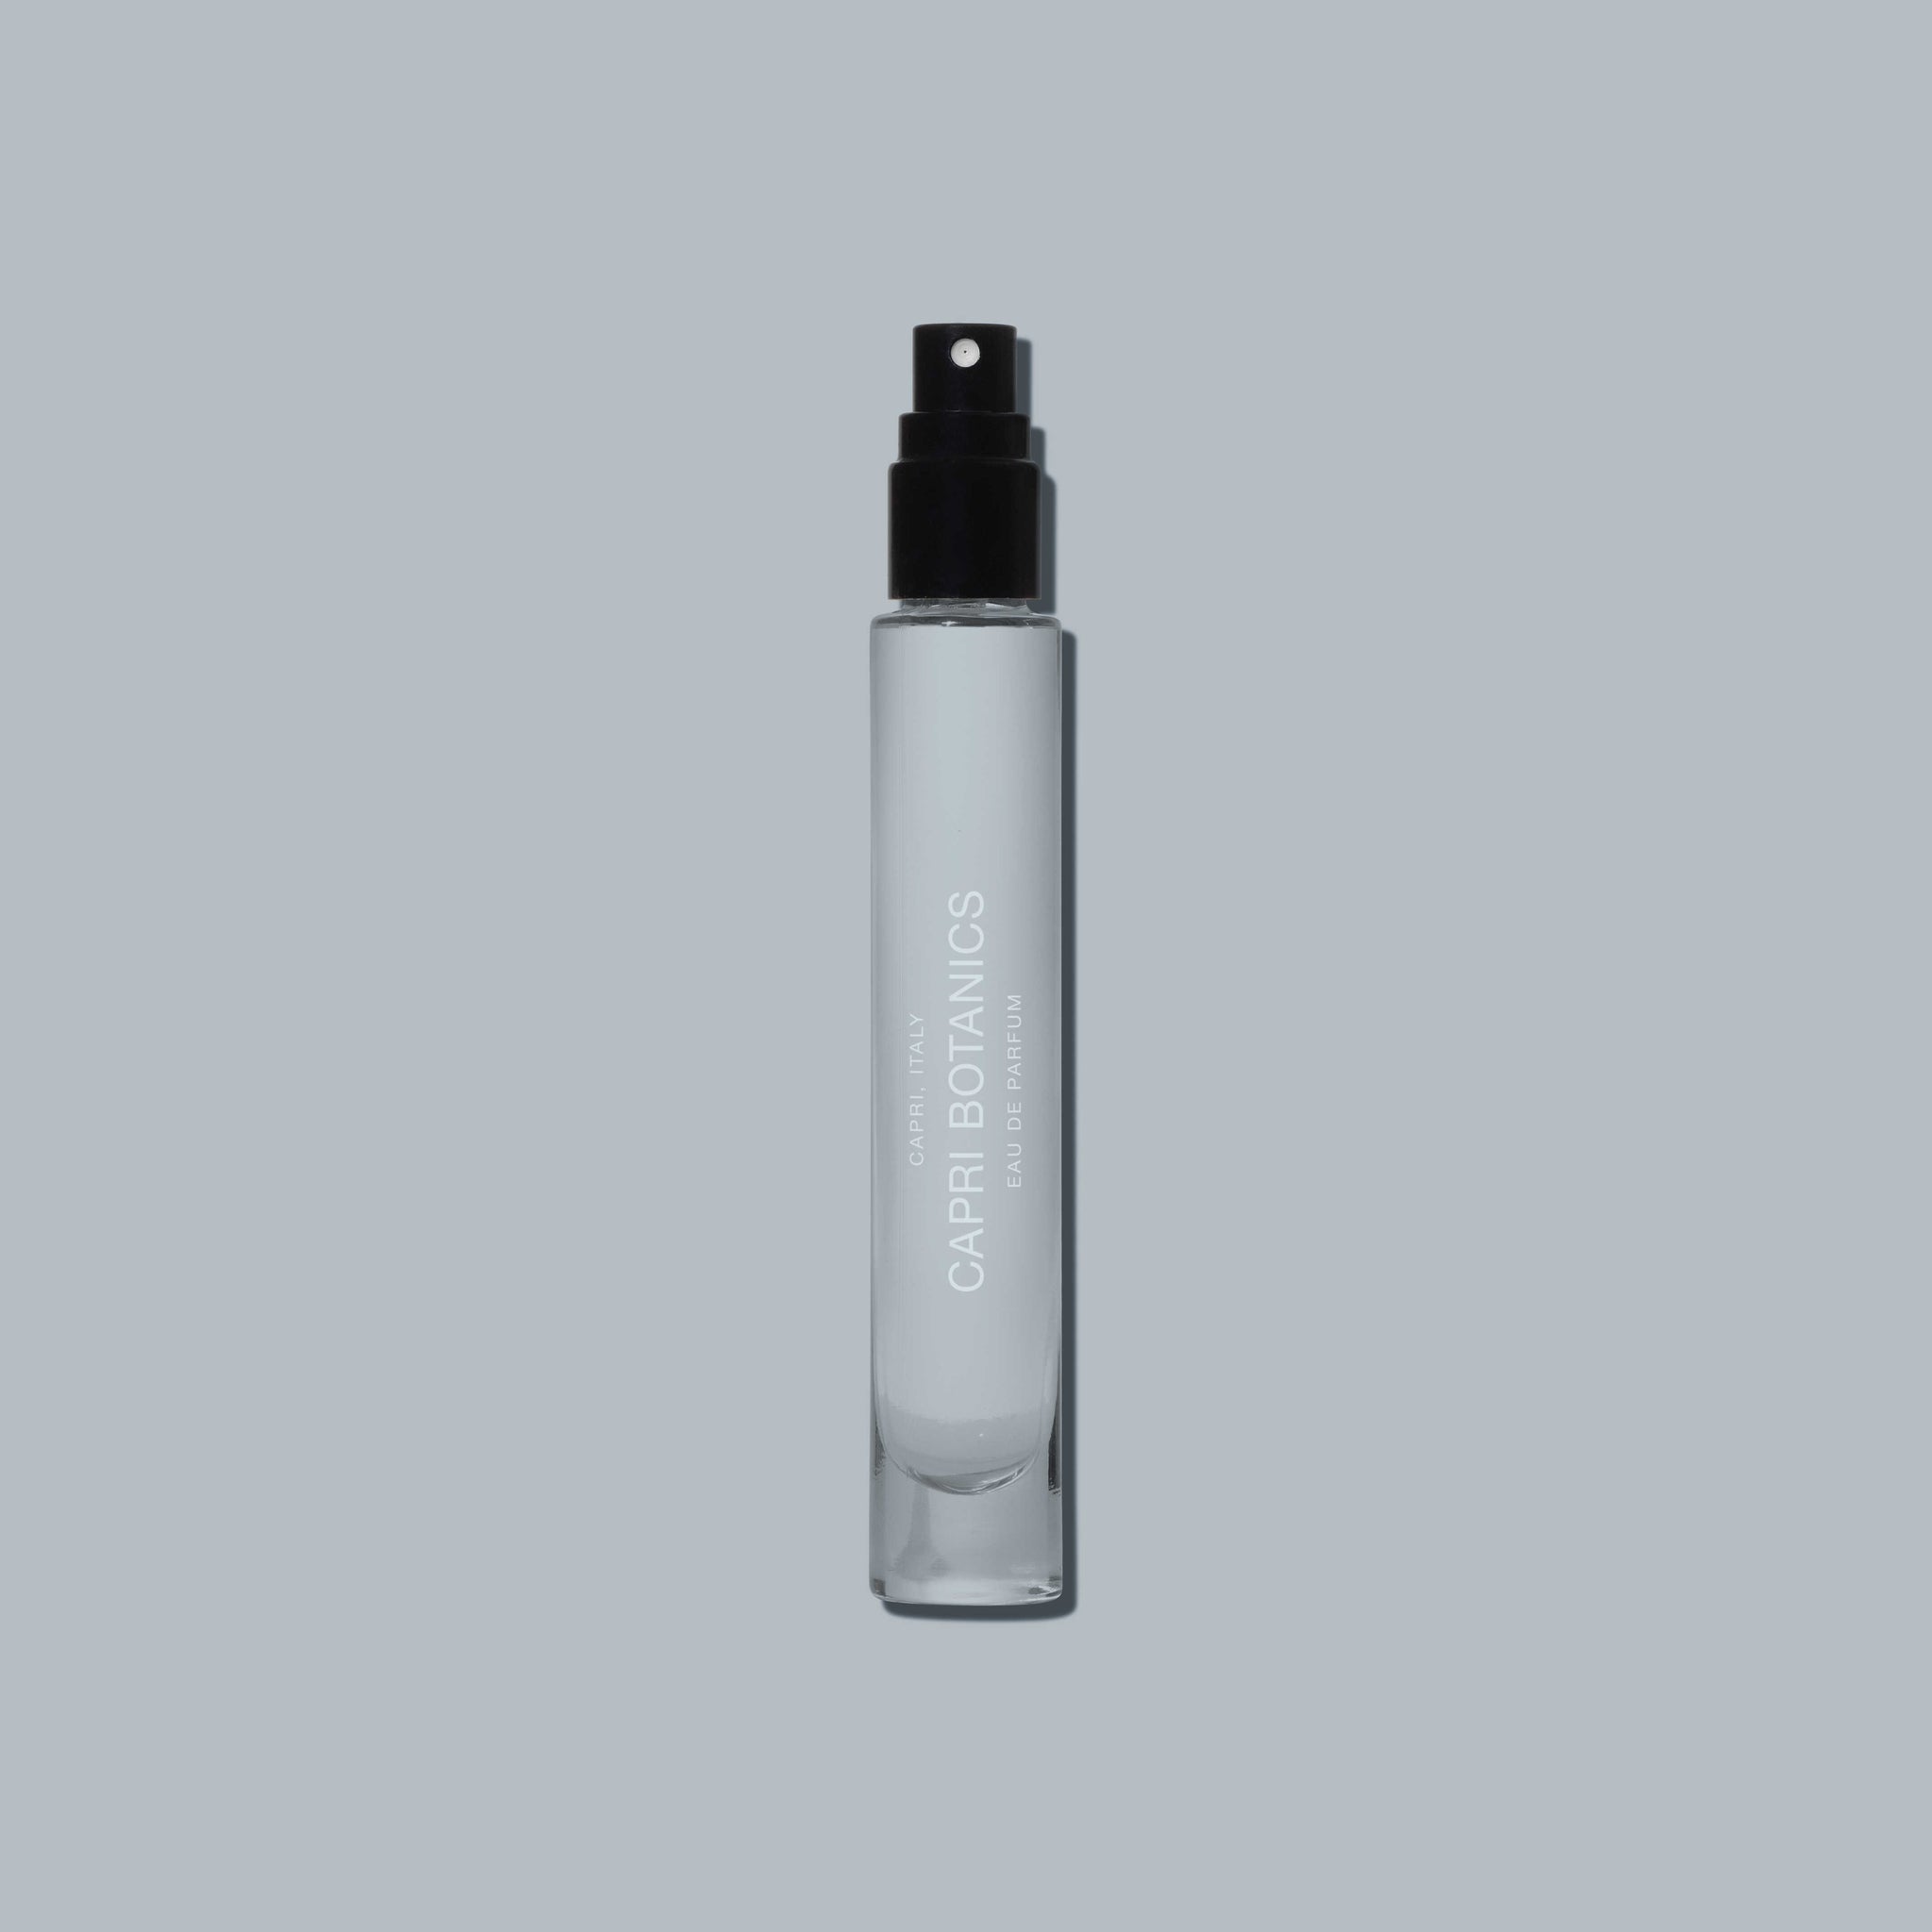 Perfume Spray Bottle Mockup - Copal Studio Packaging Mockups For Designers